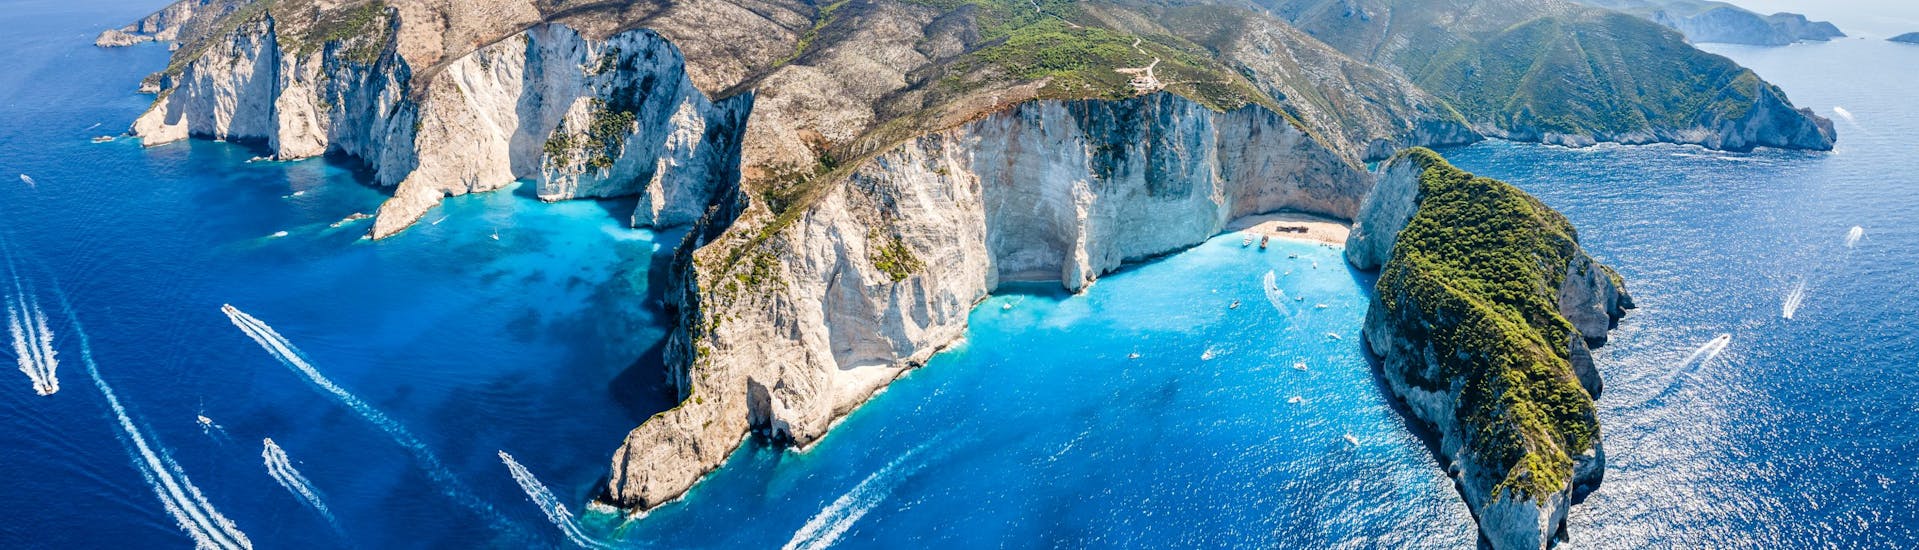 Balade privée en bateau Zakynthos (Zante) - Grottes bleues Zakynthos avec Baignade & Visites touristiques.